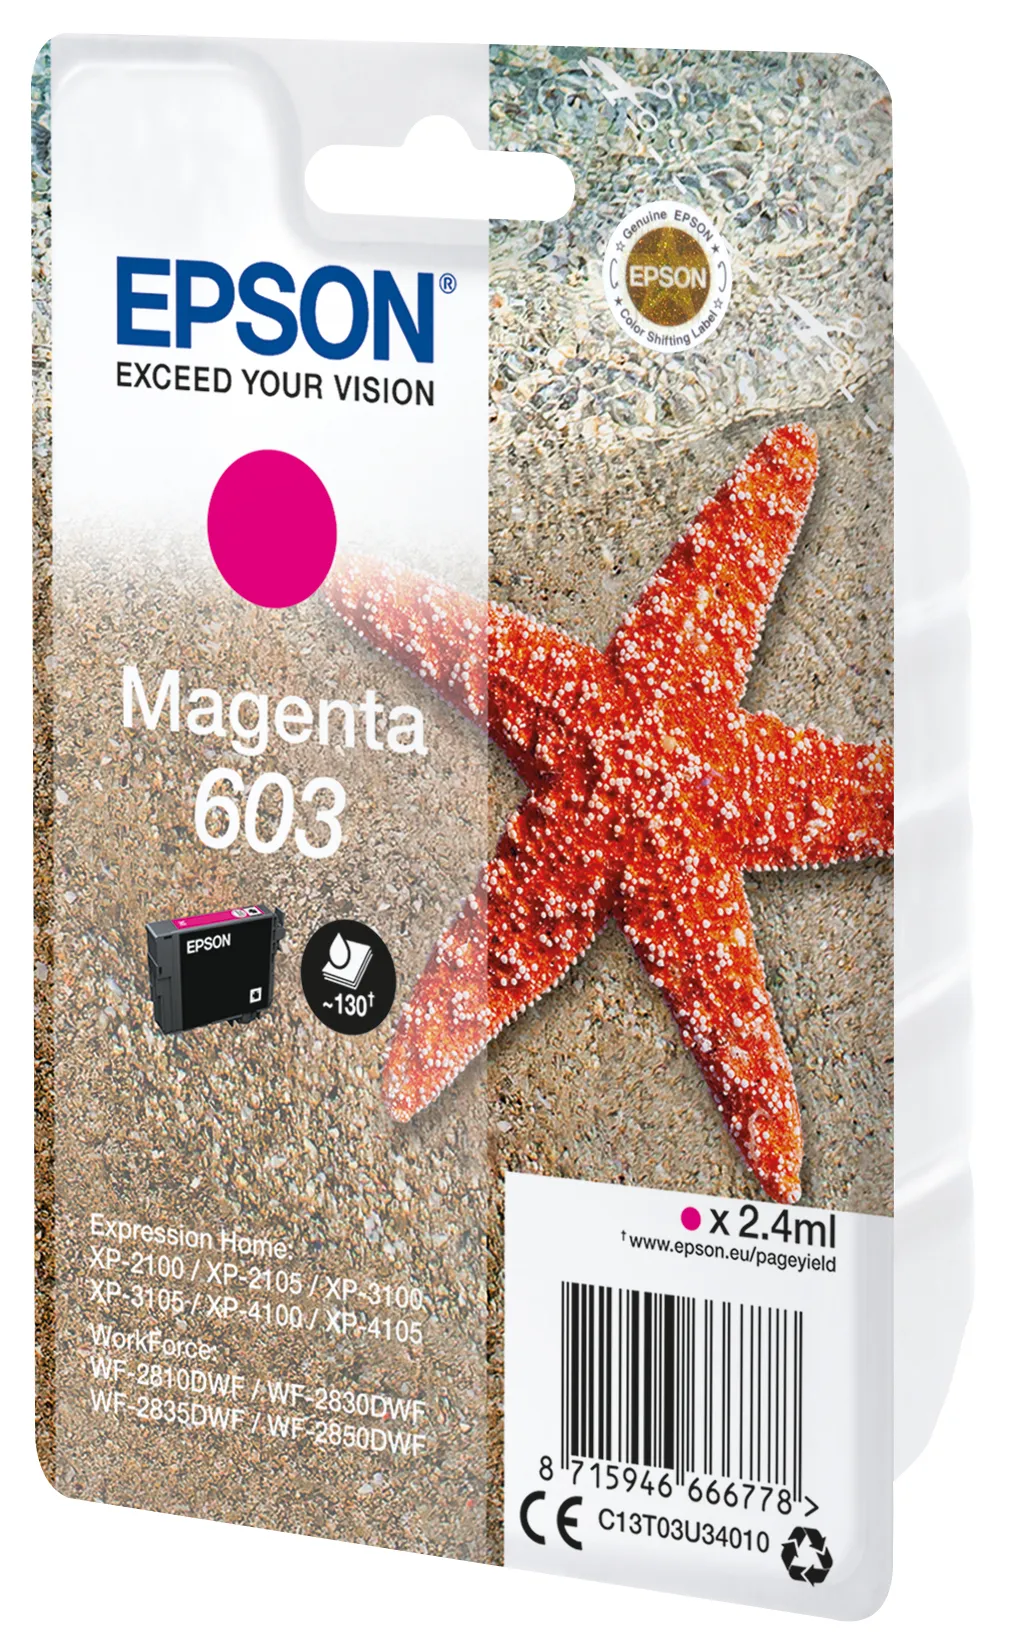 Vente EPSON Singlepack Magenta 603 Ink Epson au meilleur prix - visuel 4